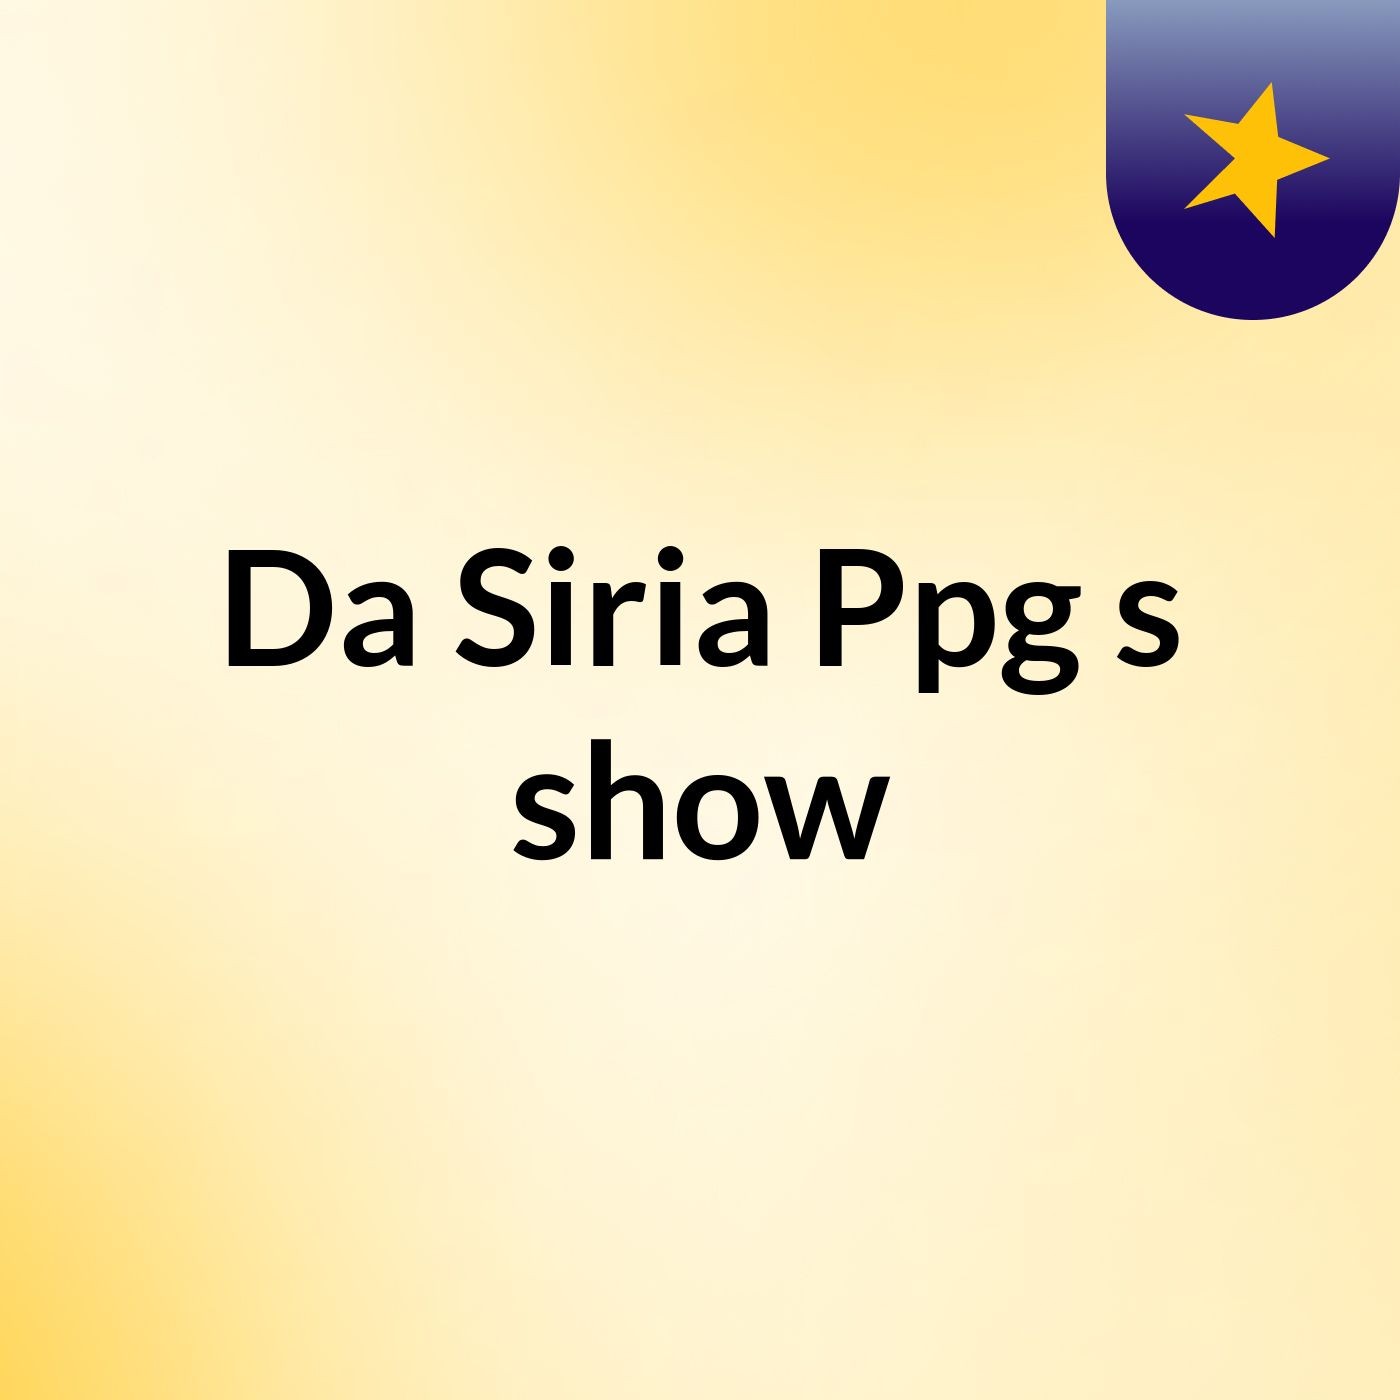 Da Siria Ppg's show